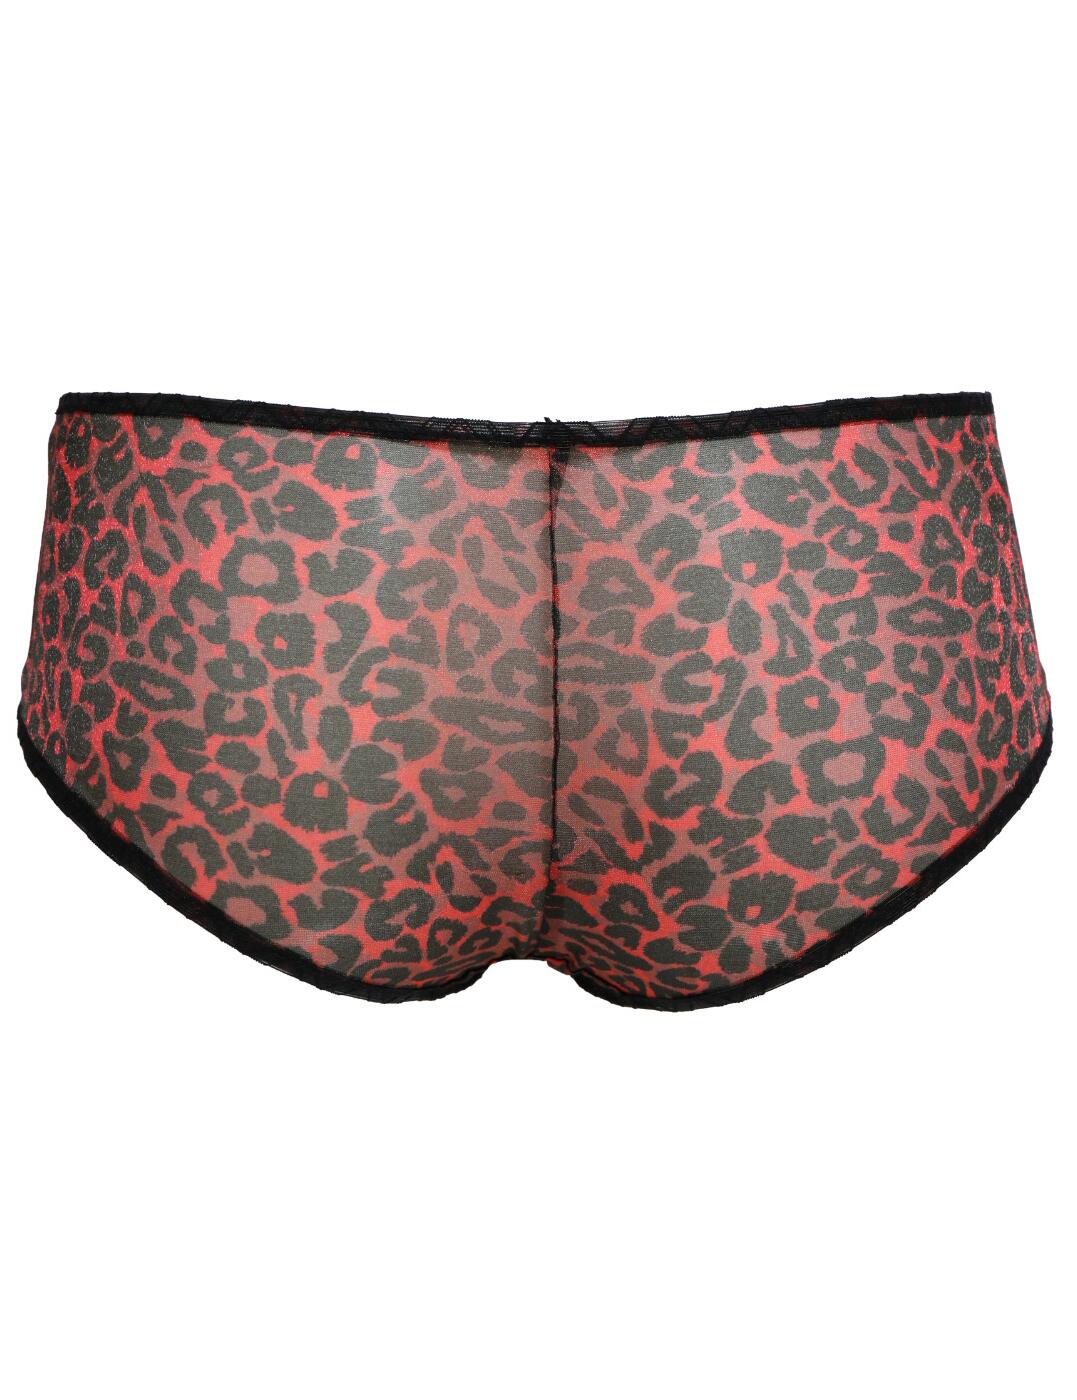 Women's Gossard 13106 Glossies Leopard Sheer Thong (Animal Print